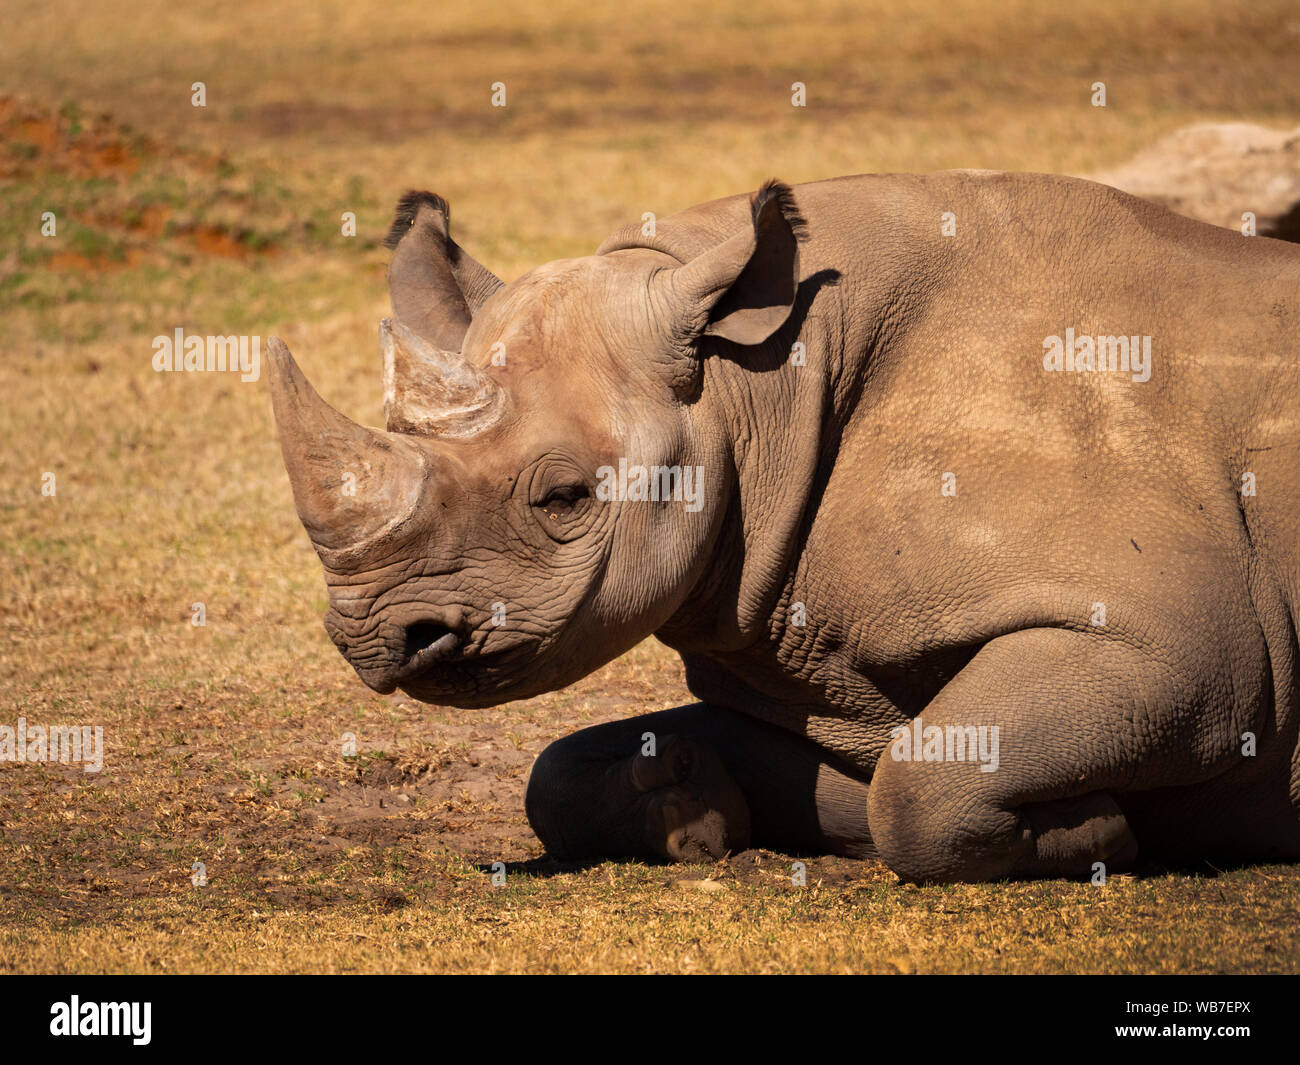 A critically endangered Black Rhinoceros, Diceros bicornis, in a captive breeding program in its enclosure. Stock Photo